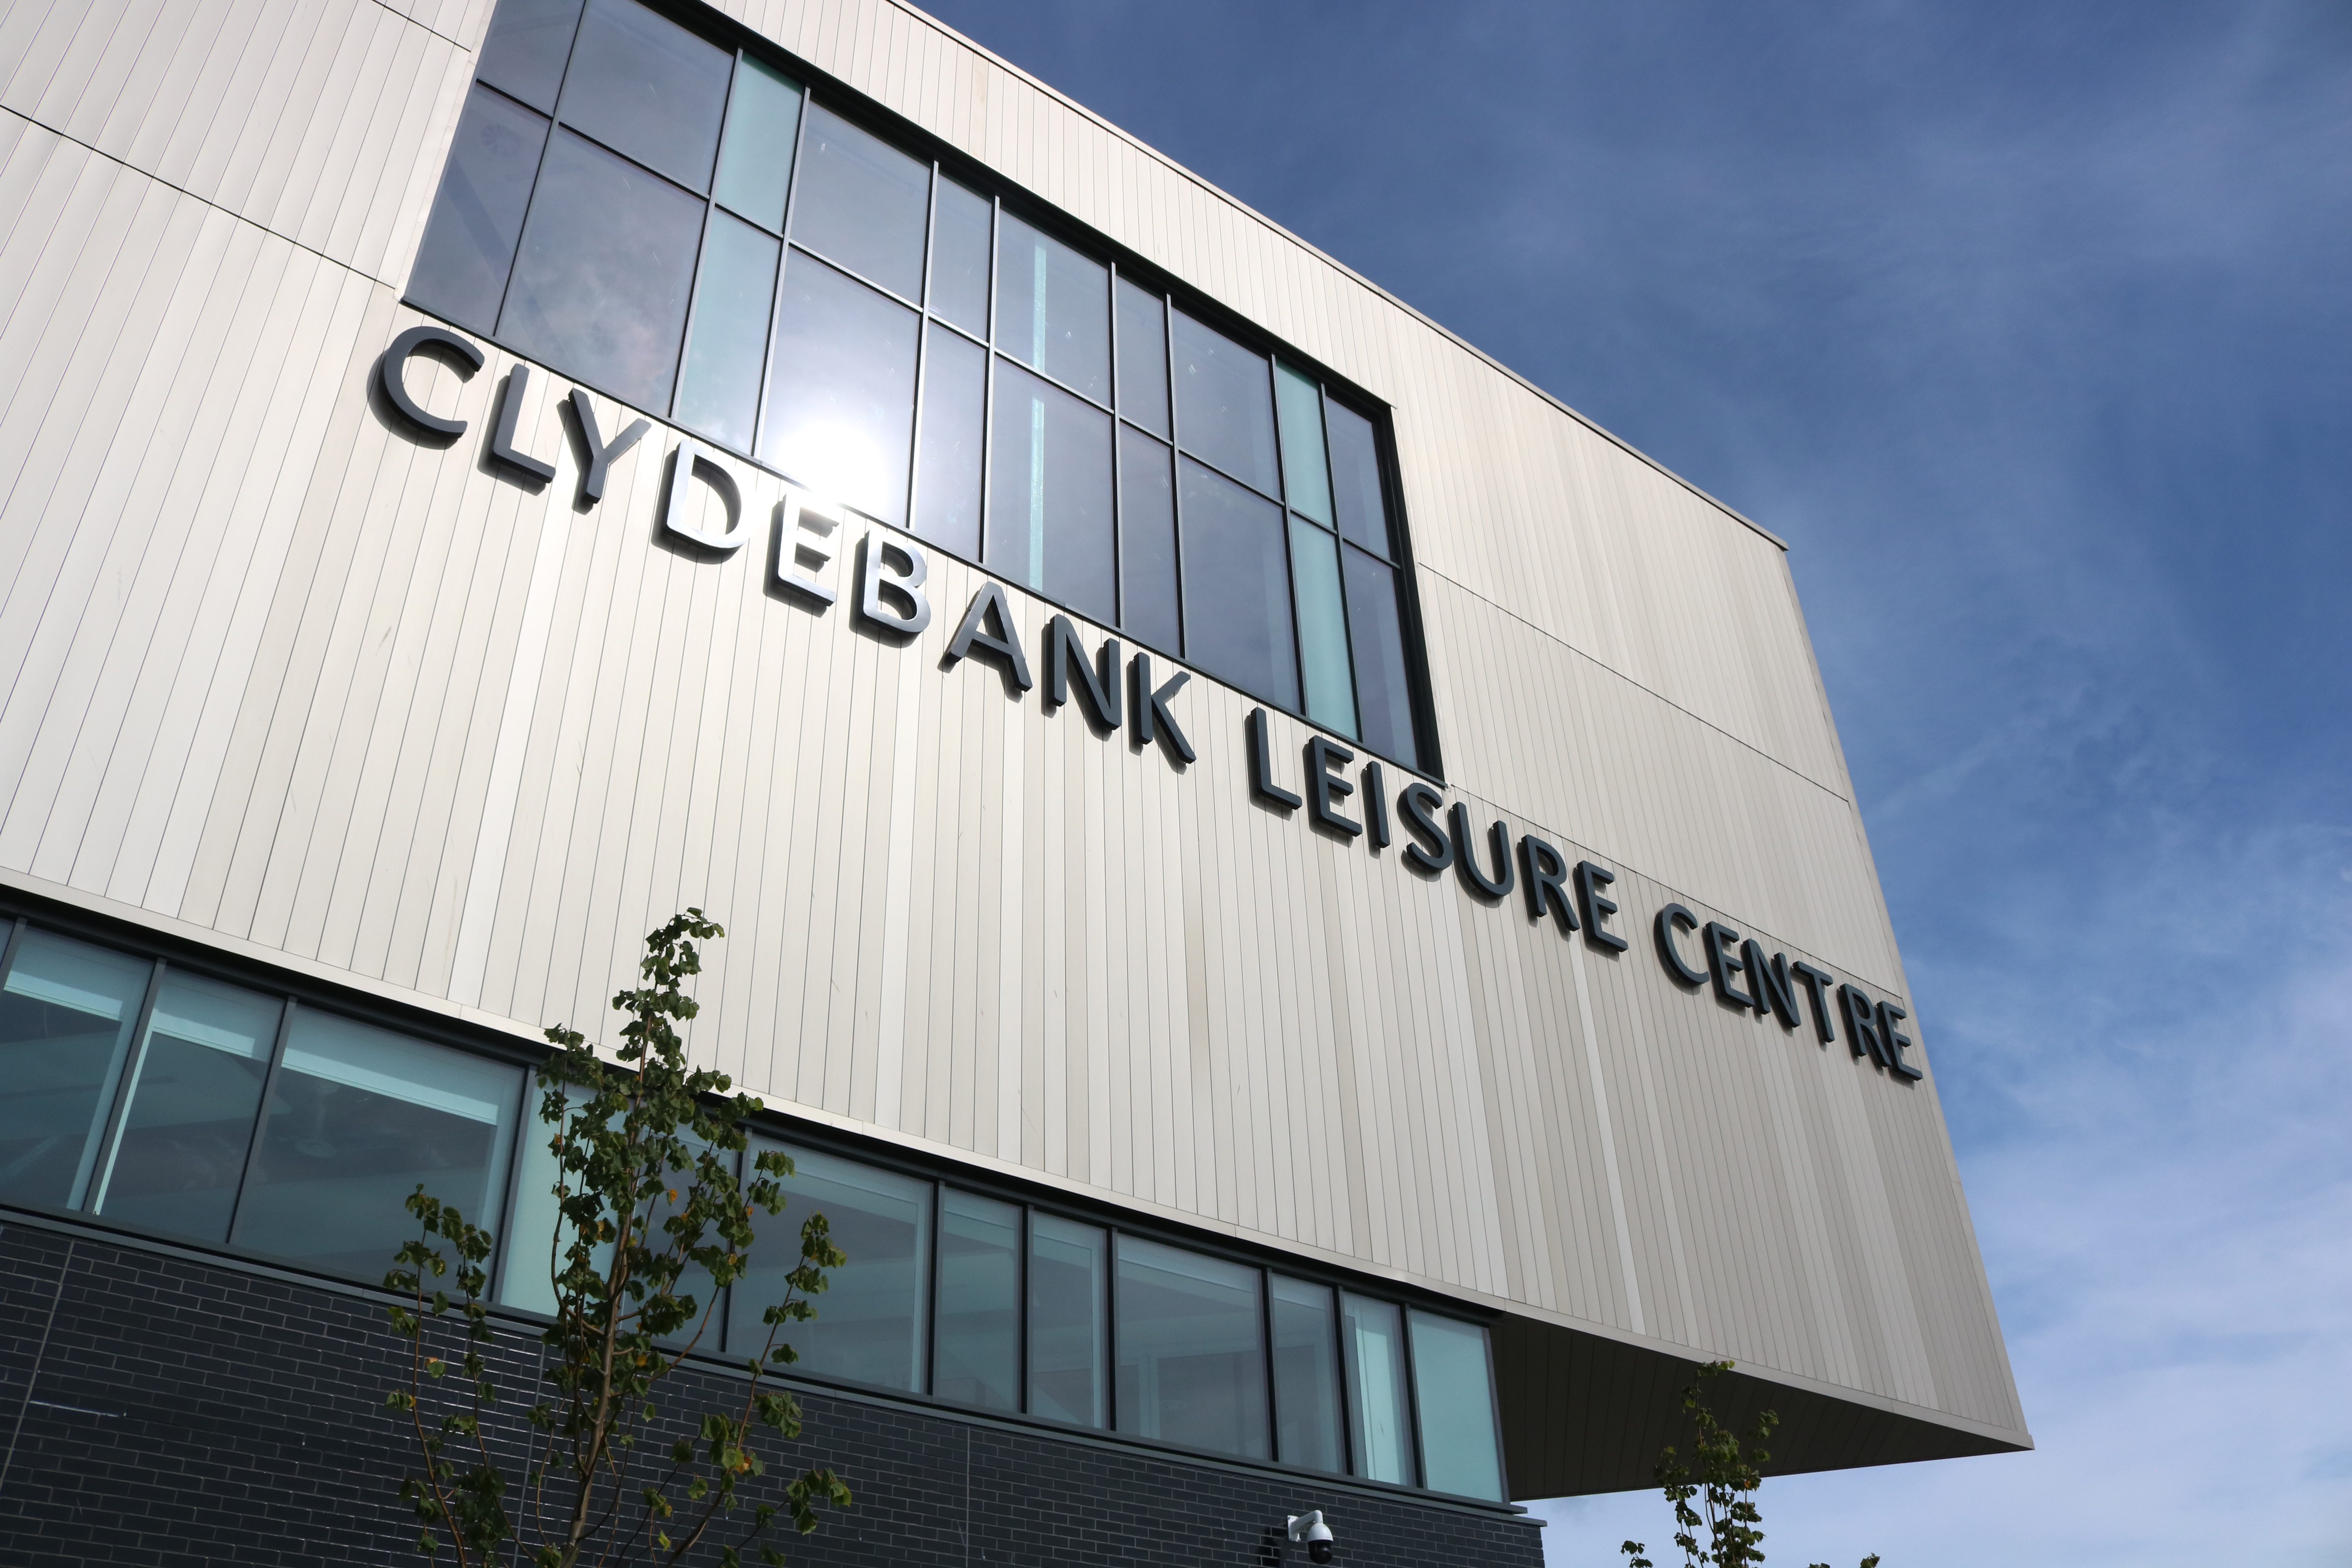 Clydebank Leisure Centre 7